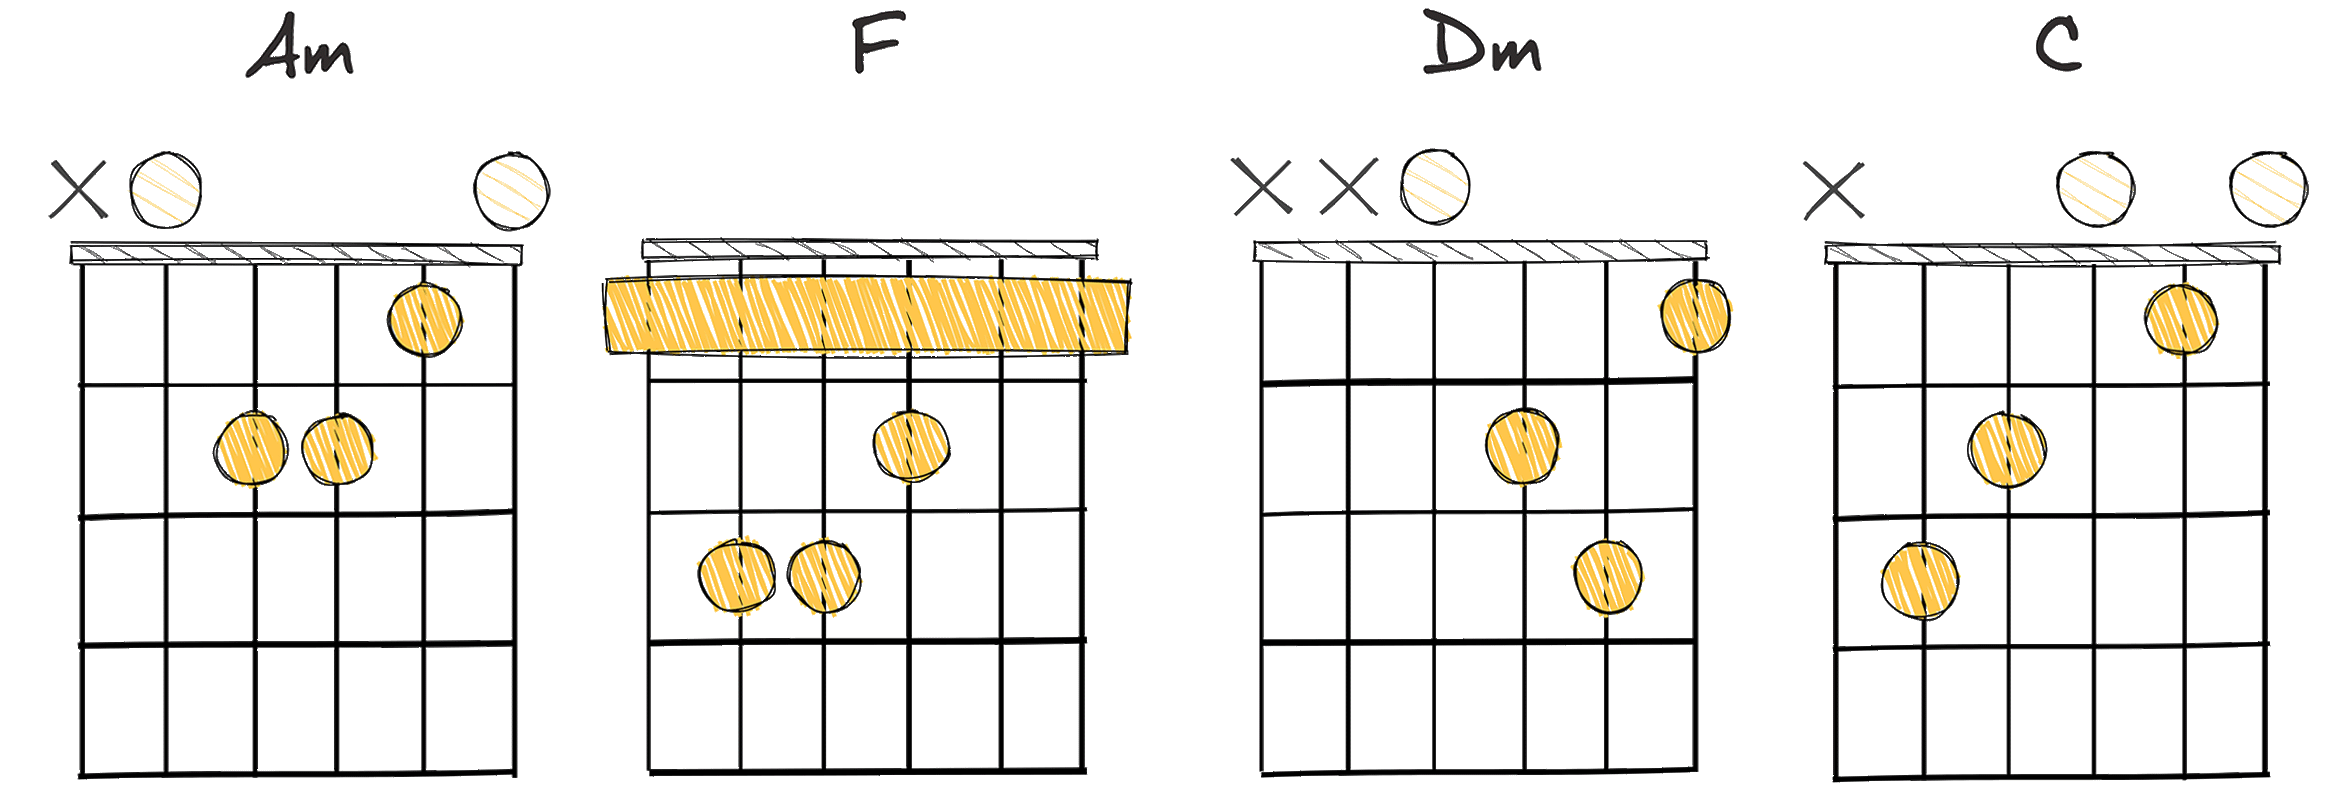 vi - IV - ii - I (6-4-2-1) chords diagram